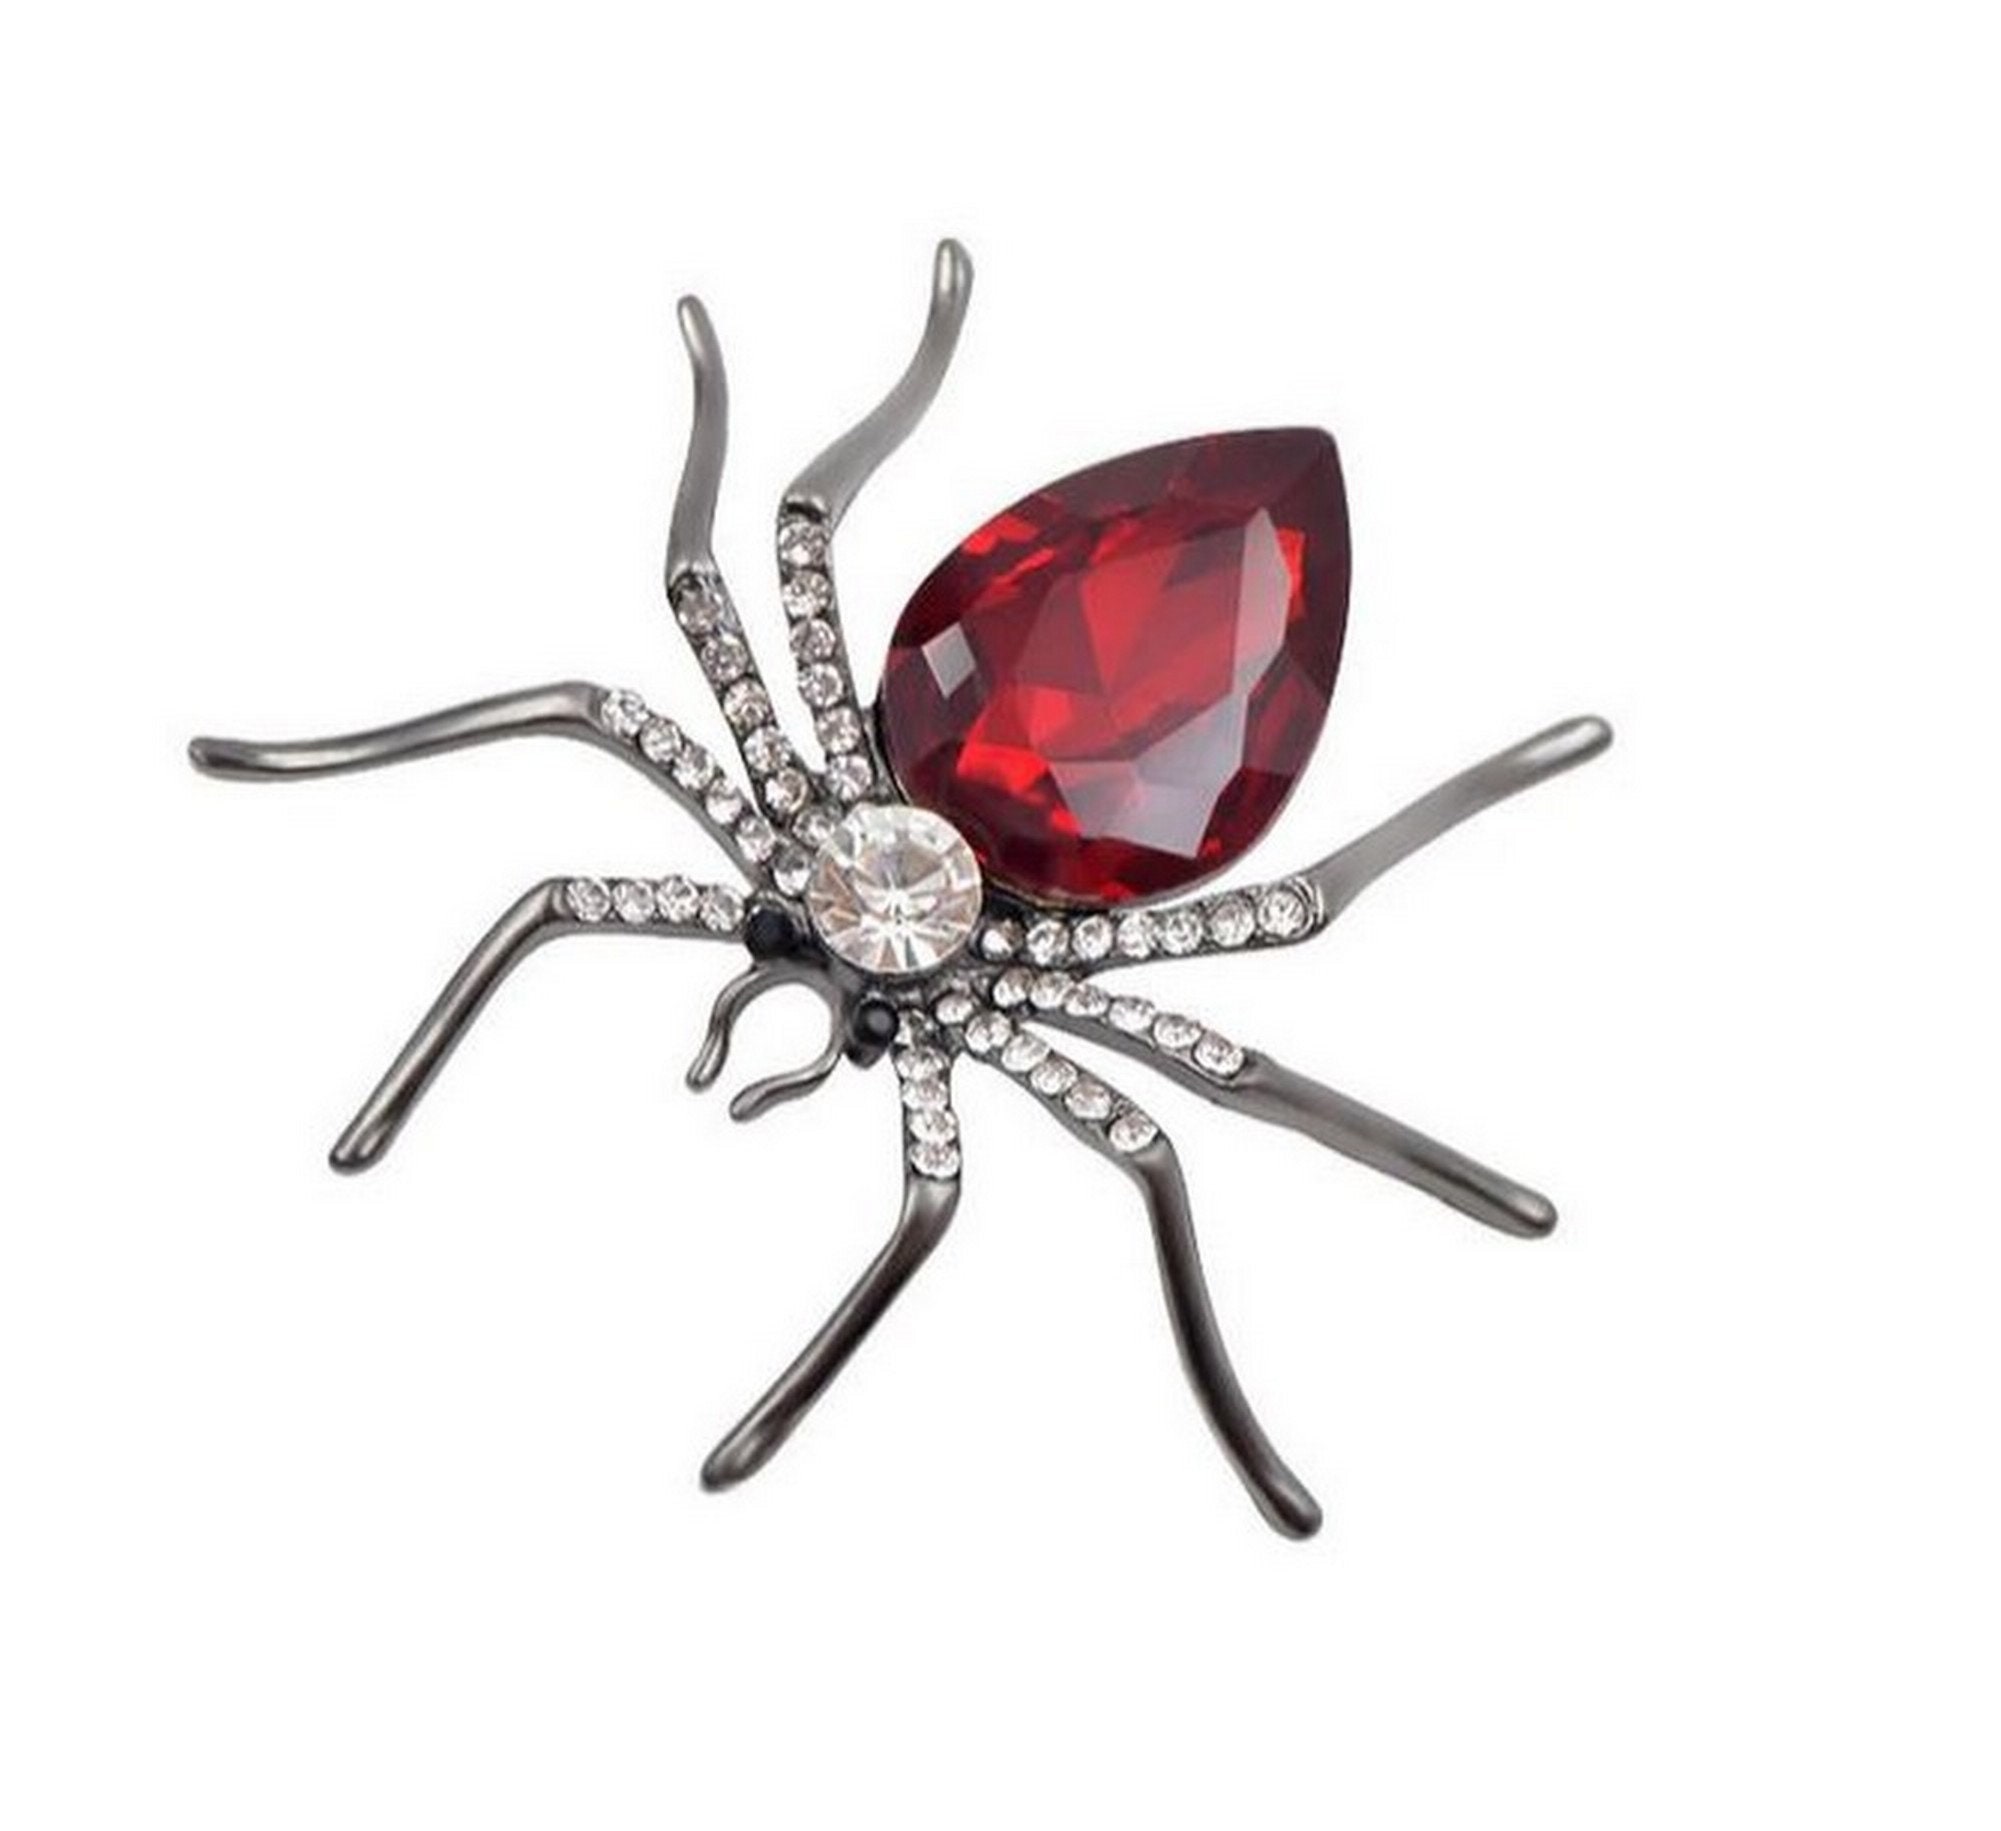 Spiderman Jewelry Brooch 